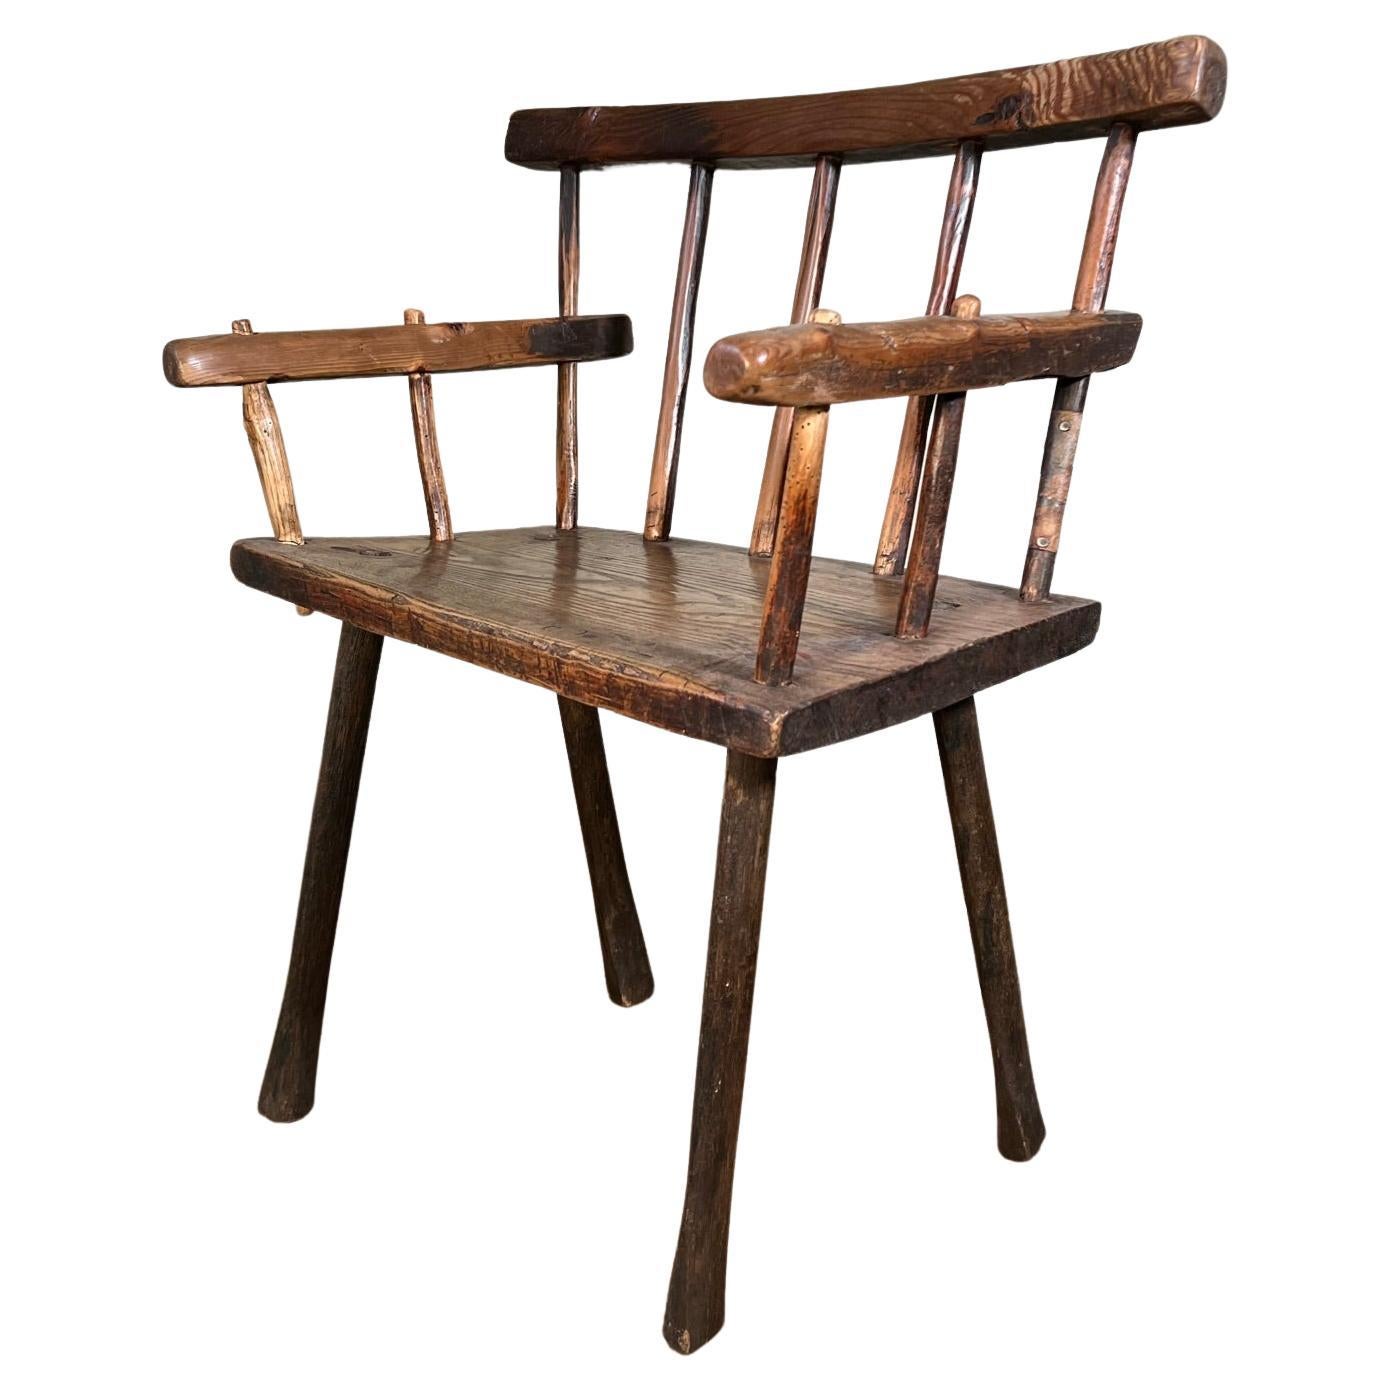 19th Century Irish Vernacular Hedge Chair